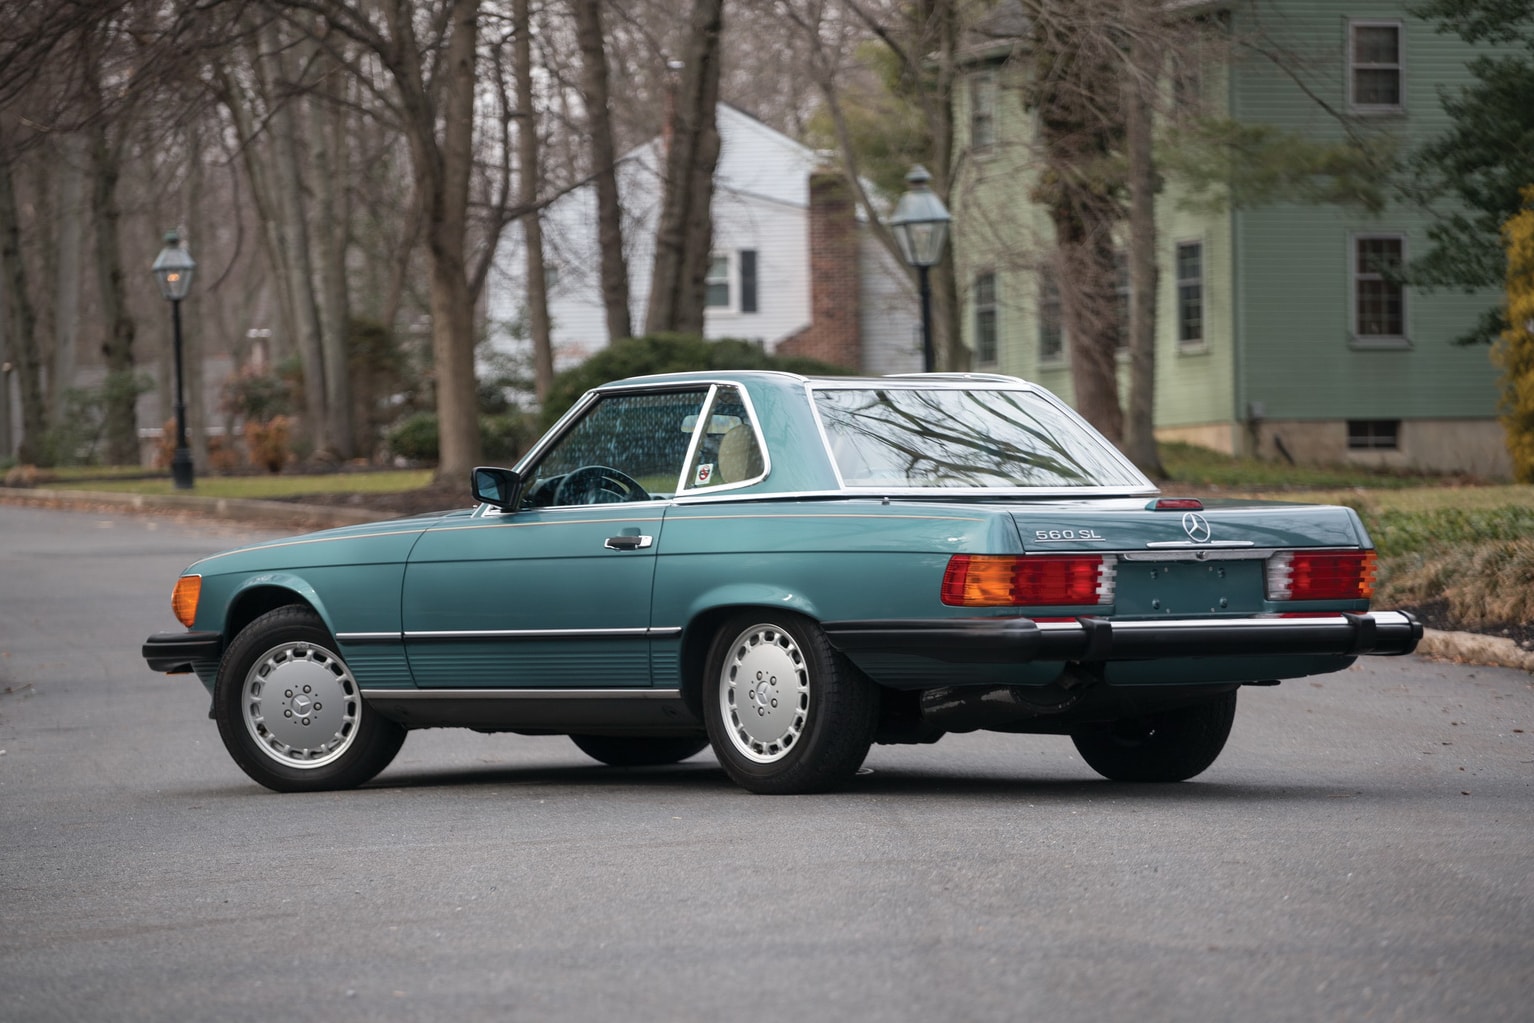 Mercedes Benz 560SL 1988 Model Garage Find Time Capsule Blue Green Metallic Color Scheme Auction RM Sotheby's